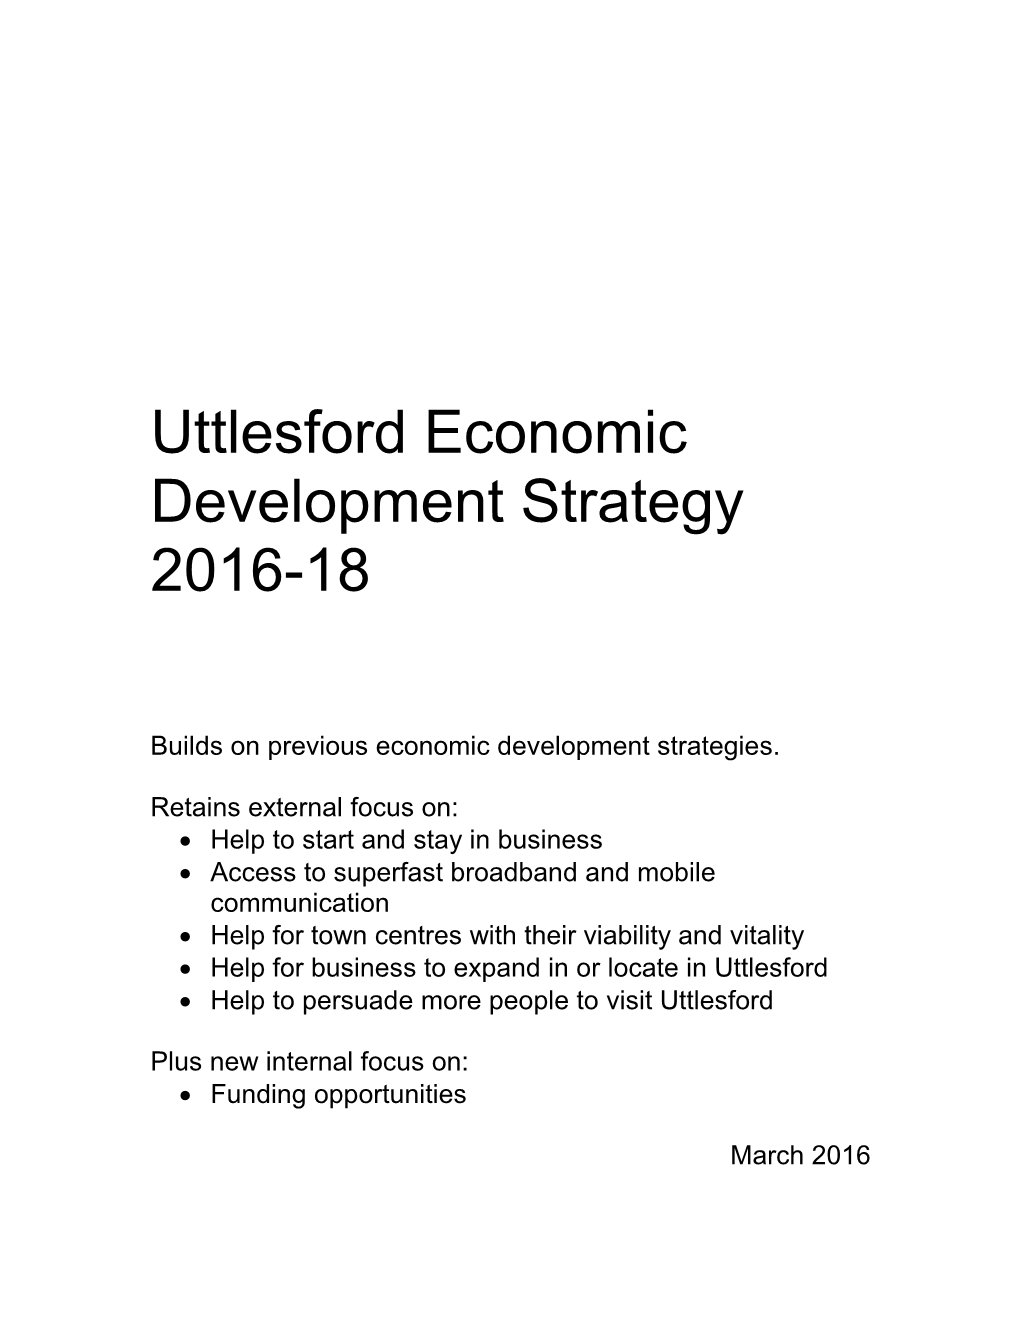 Uttlesford Economic Development Strategy 2016-18